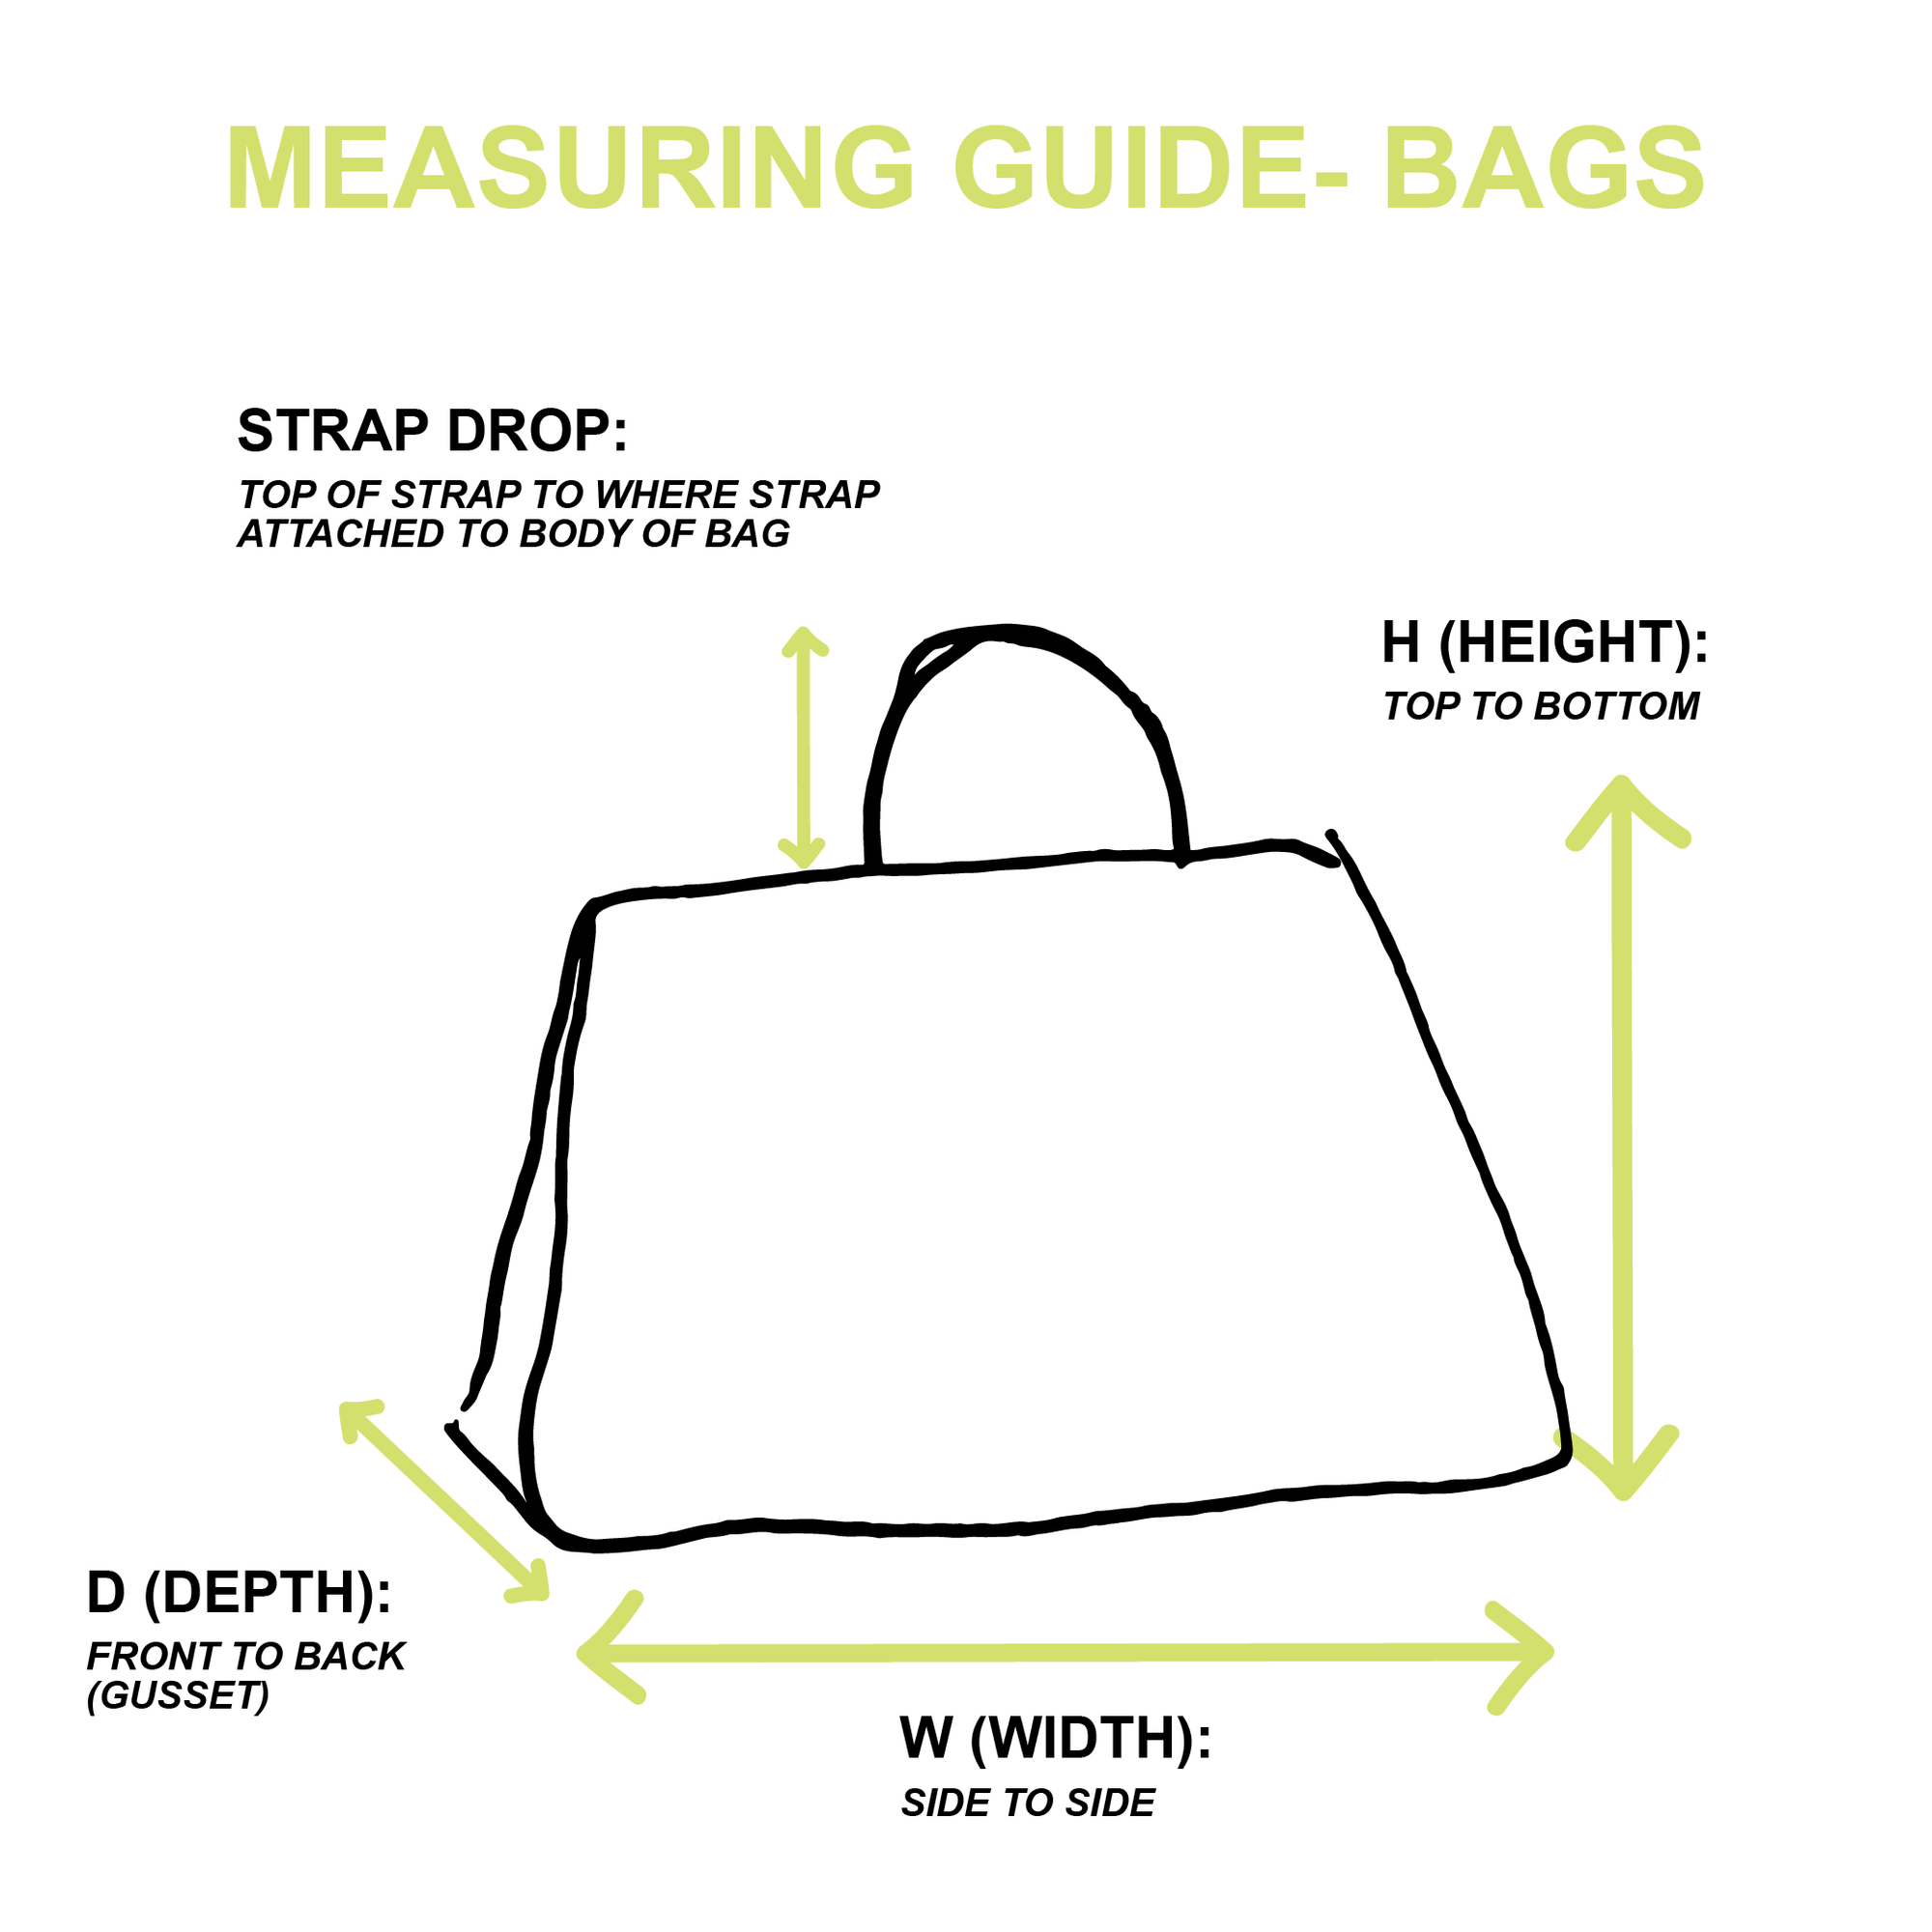 Louis Vuitton Silver Miroir Mini Shoulder Bag - Handbags